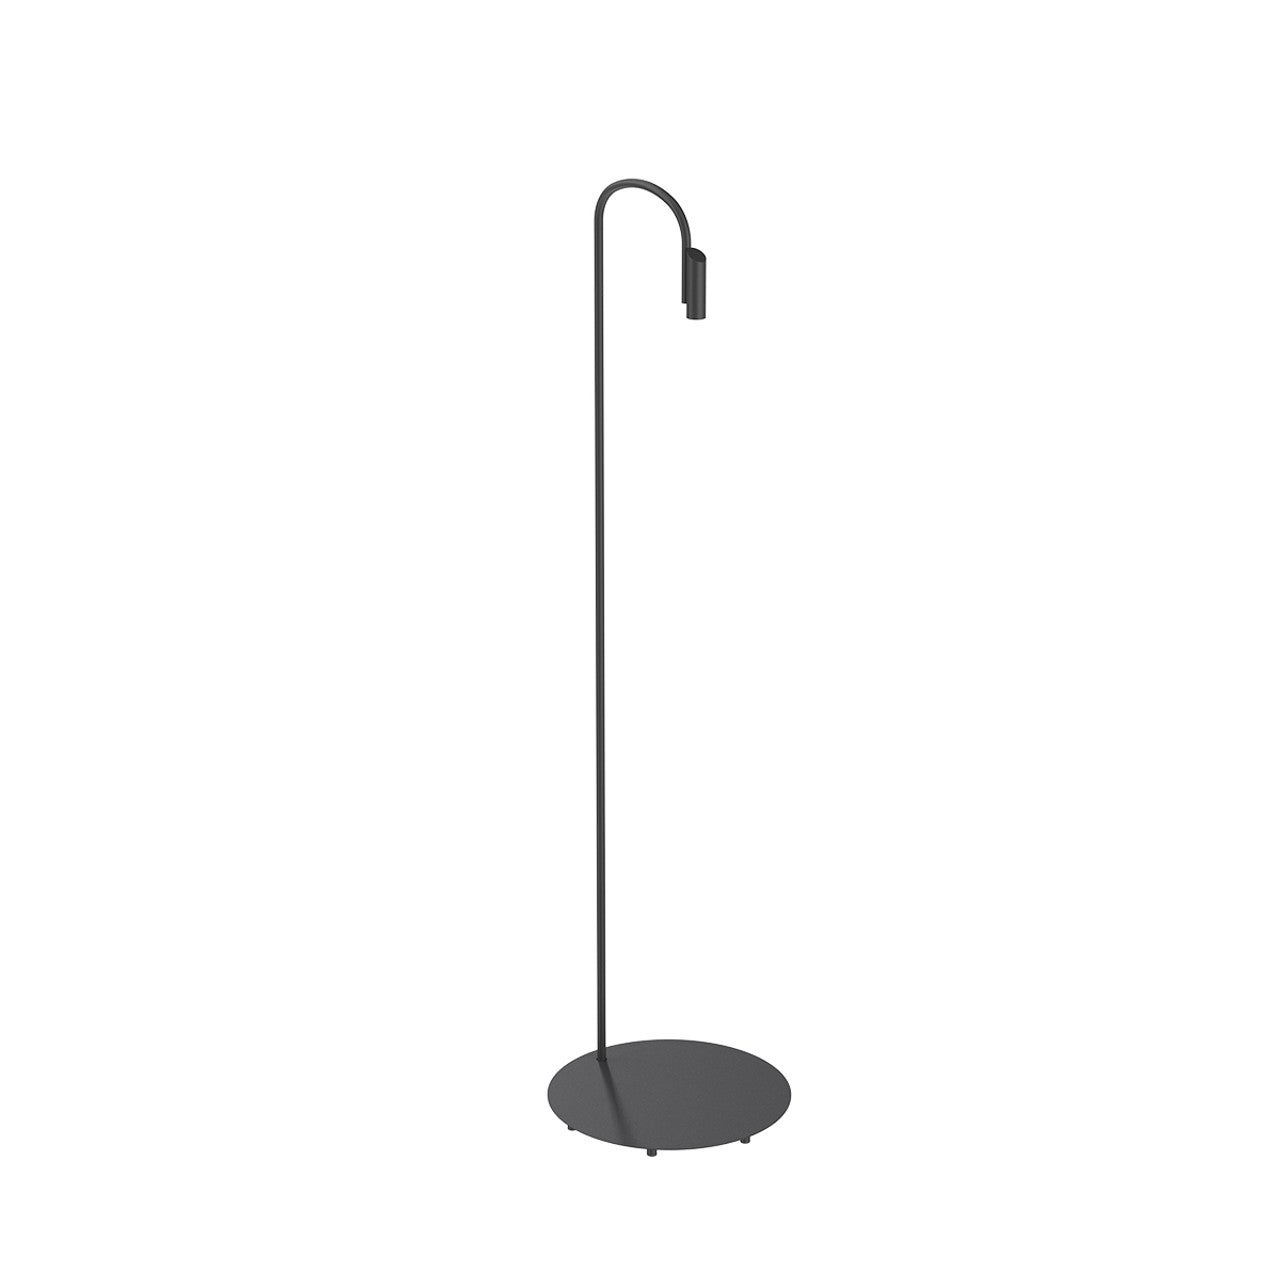 Flos Caule 3000K Model 4 Outdoor Floor Lamp in Black with Regular Shade For Sale